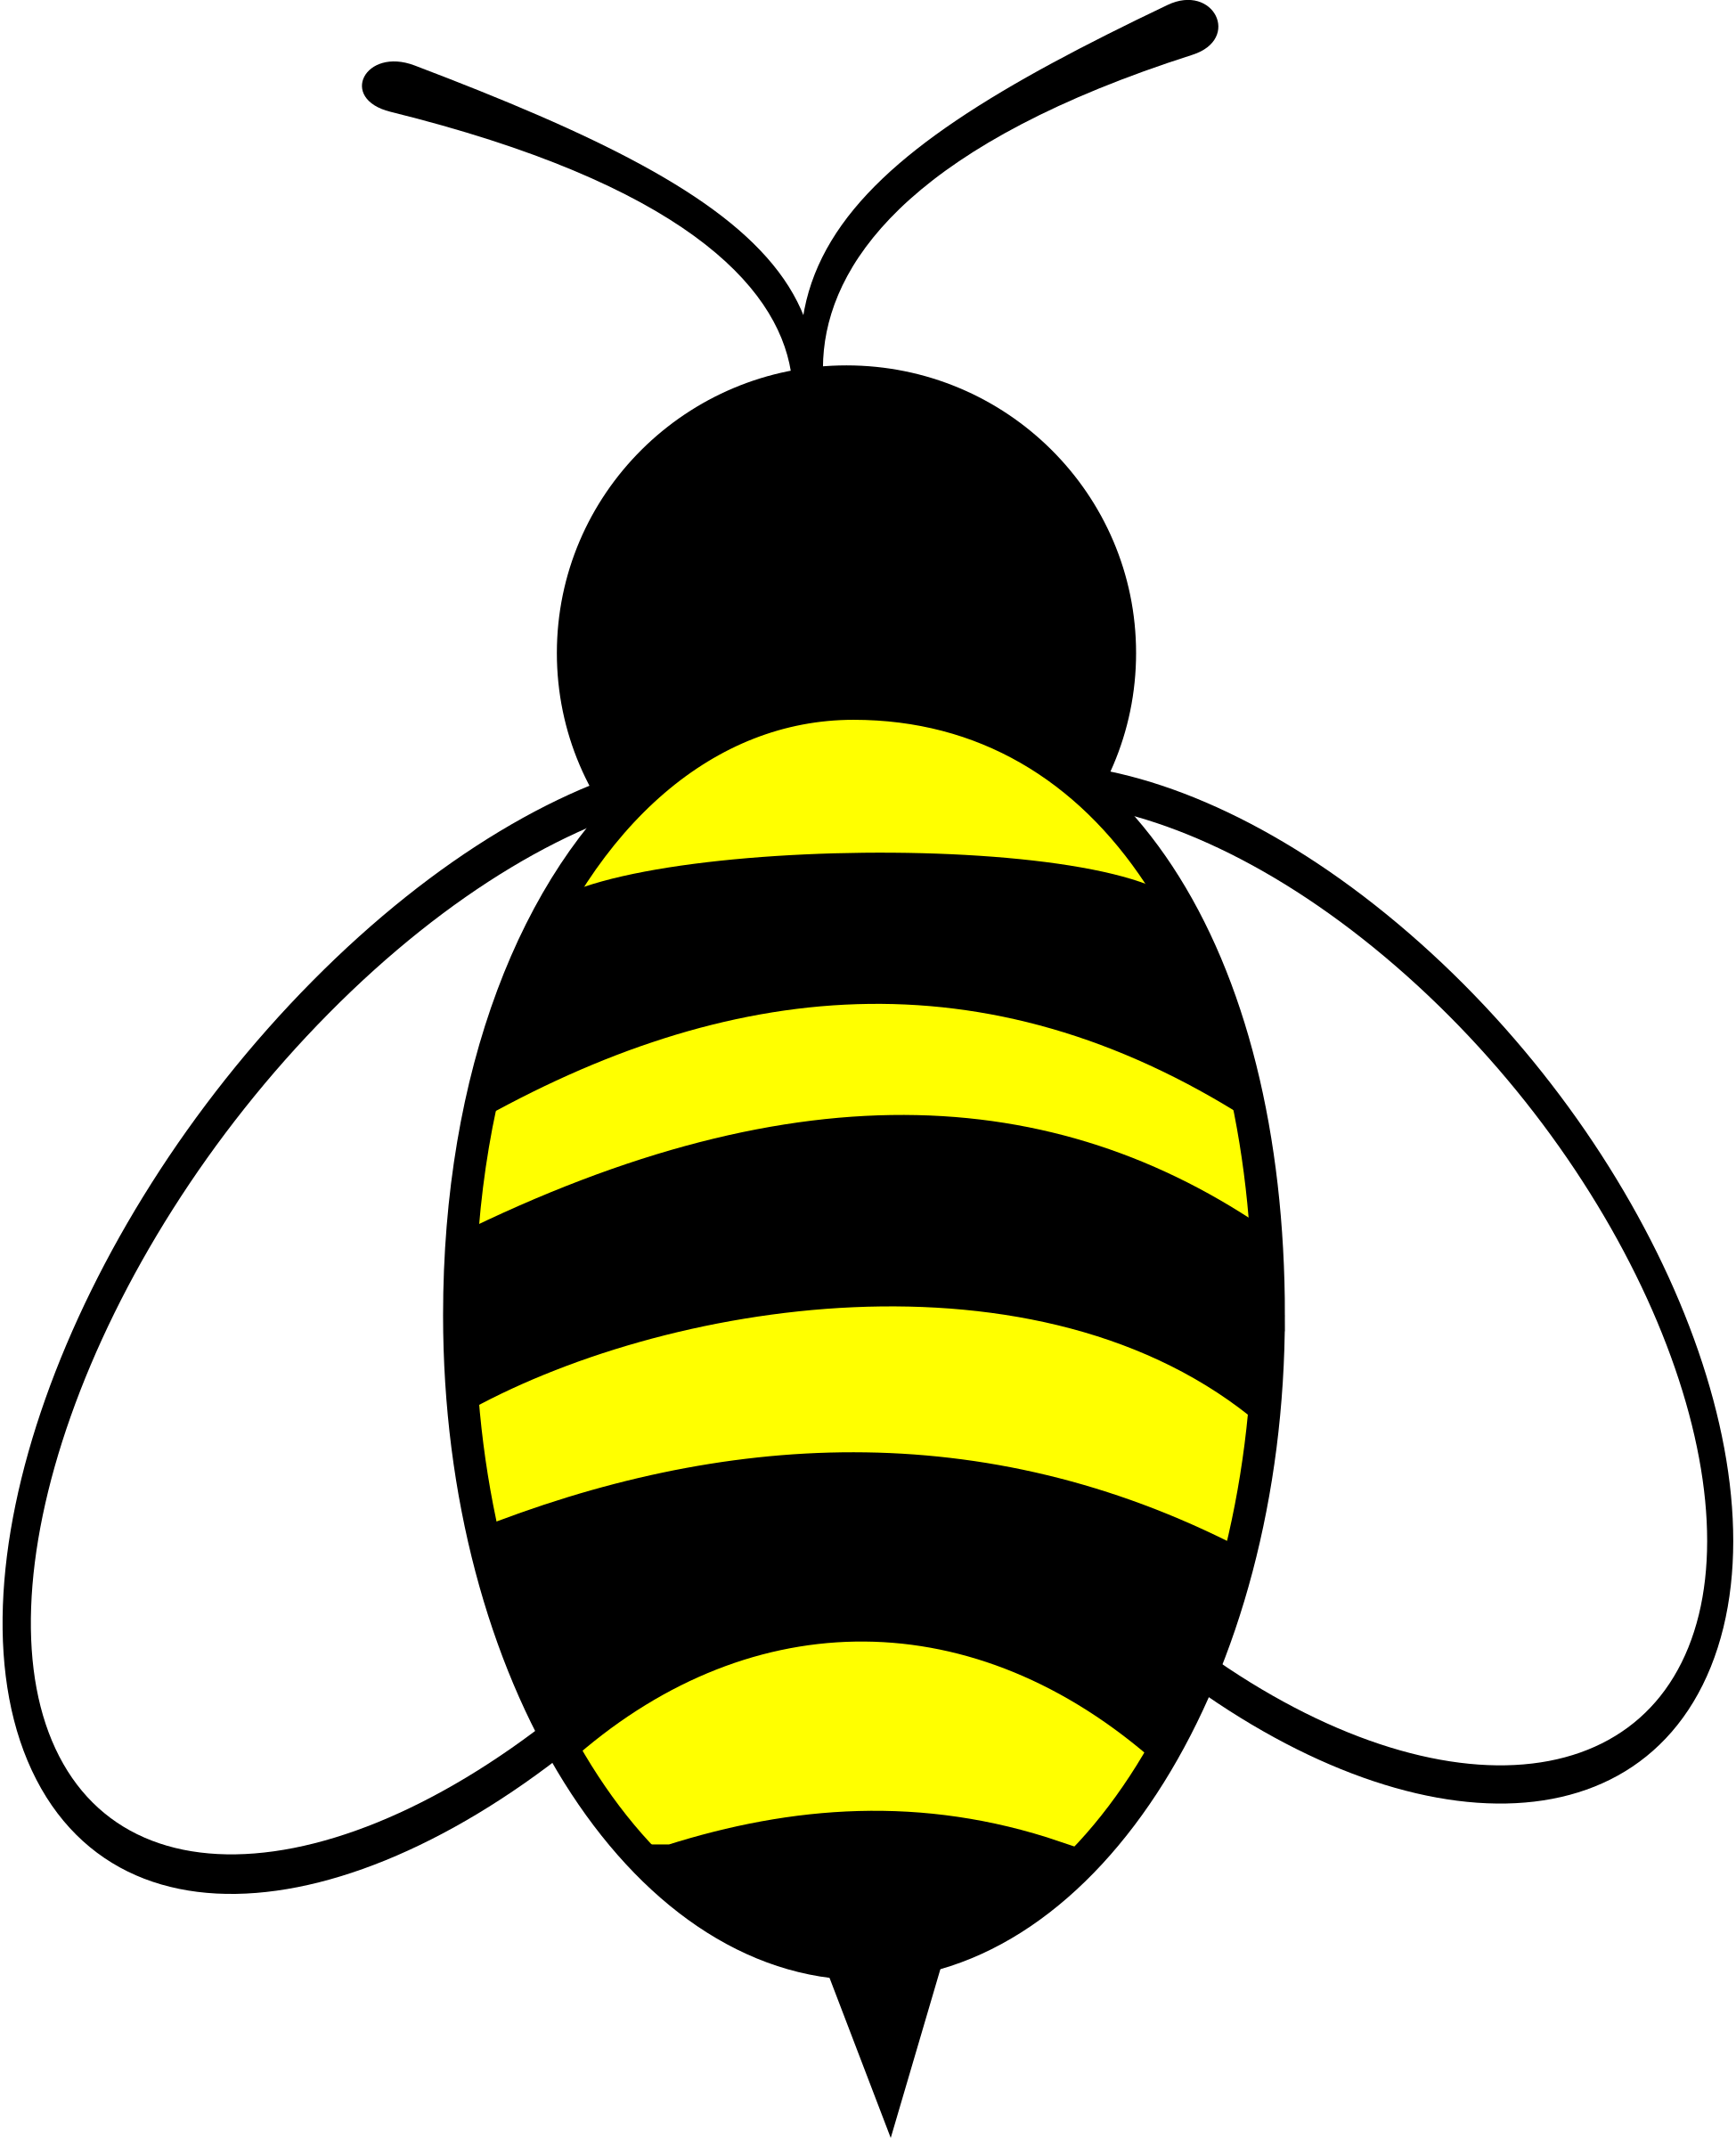 Cartoon Bee PNG Image